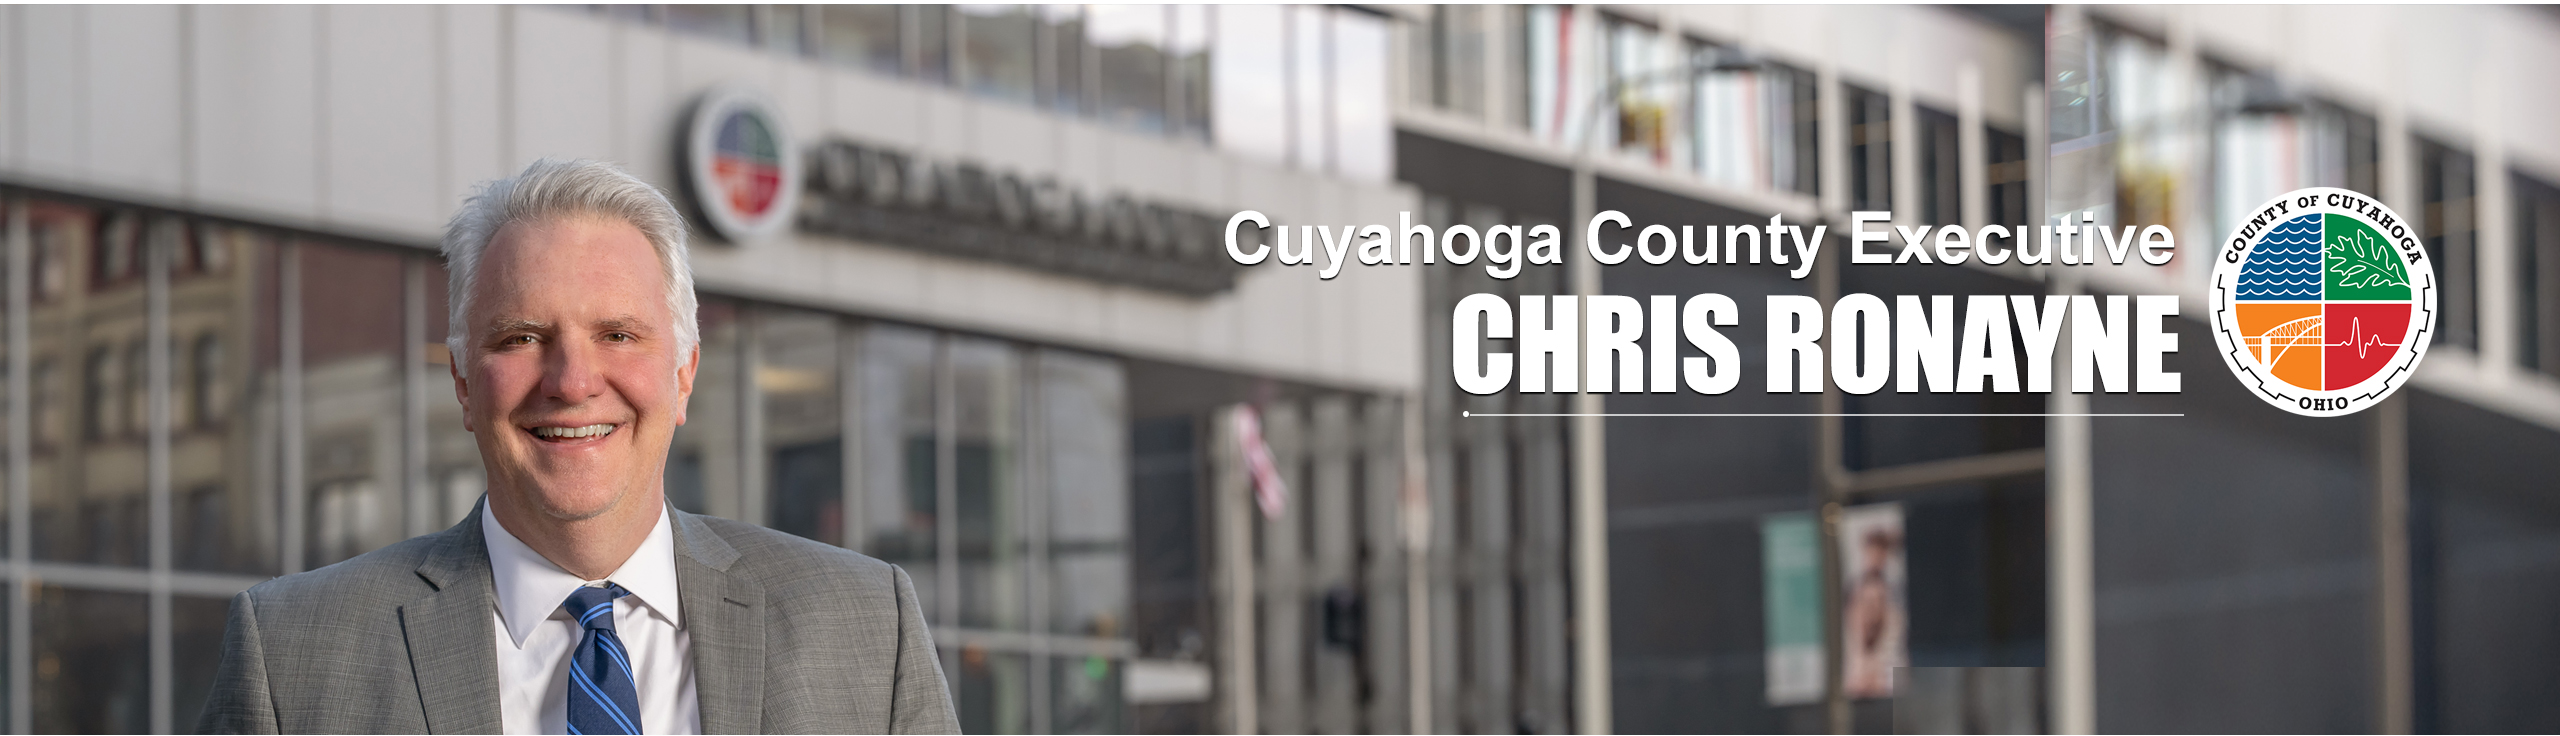 Cuyahoga County Executive, Chris Ronayne